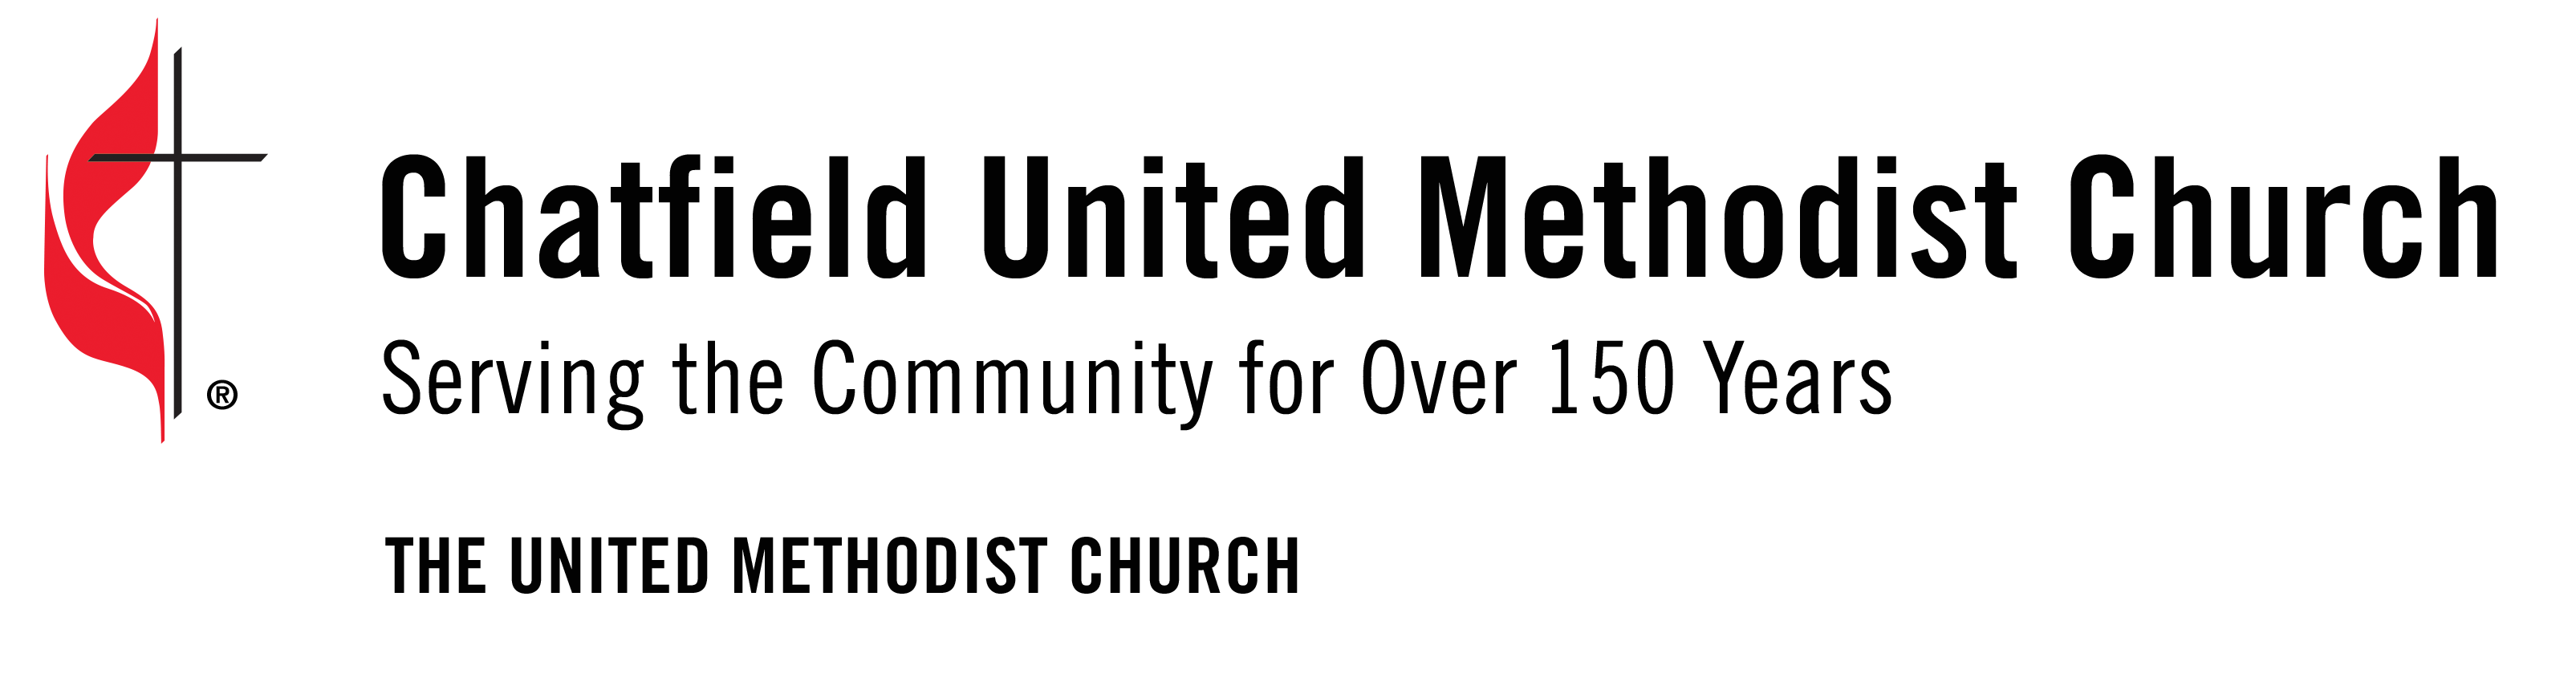 Chatfield United Methodist Church